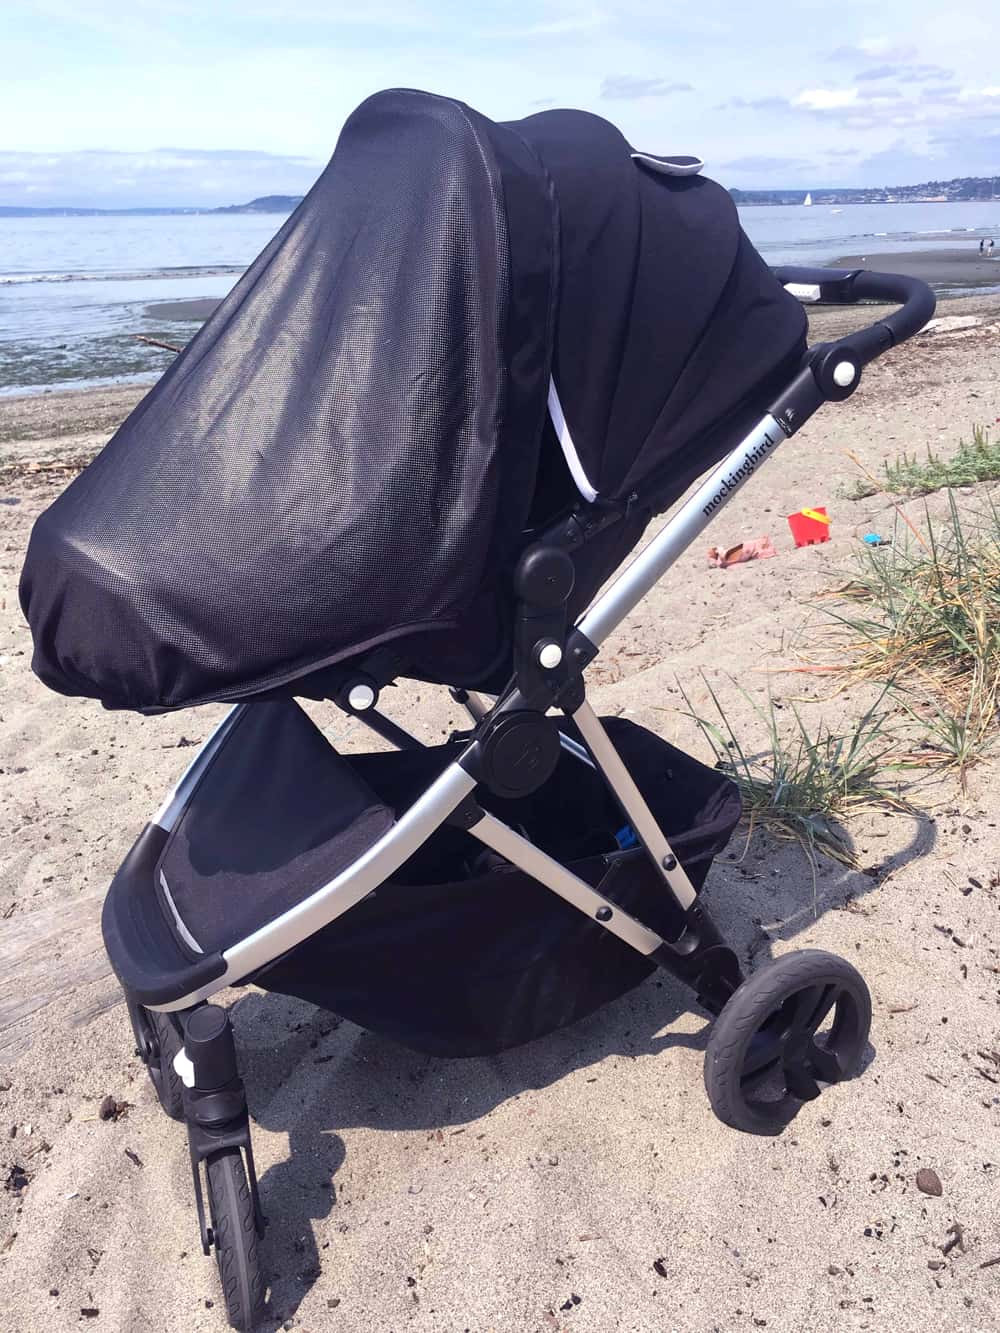 Stroller with sunshade on the beach